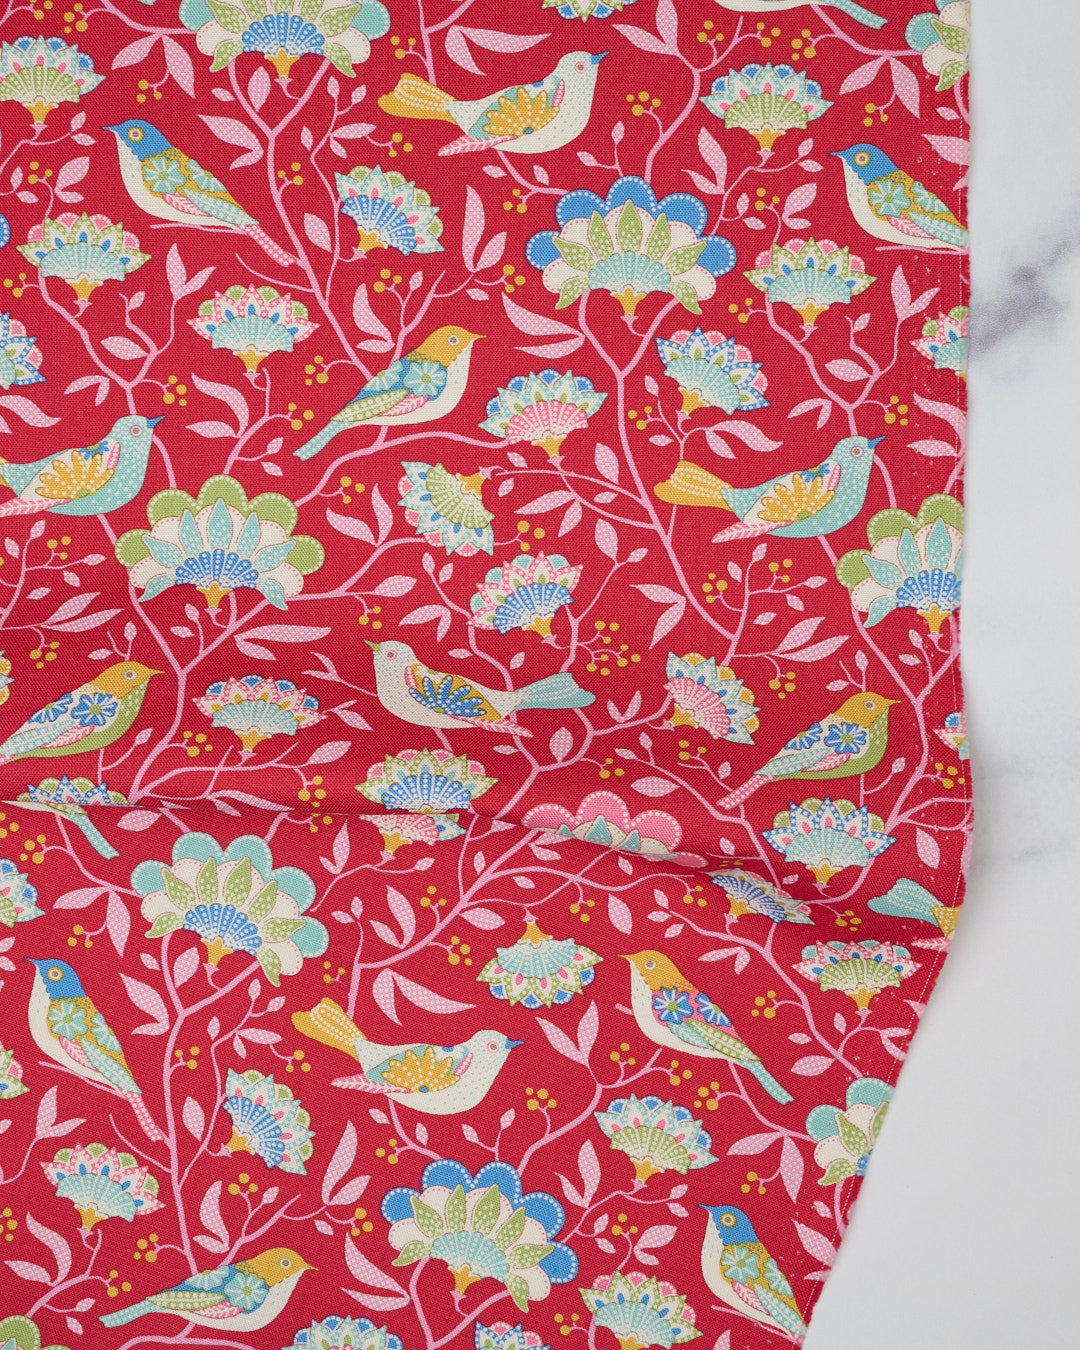 Jubilee Red Bird Tree Fabric by Tone Finnanger - Tilda Fabrics